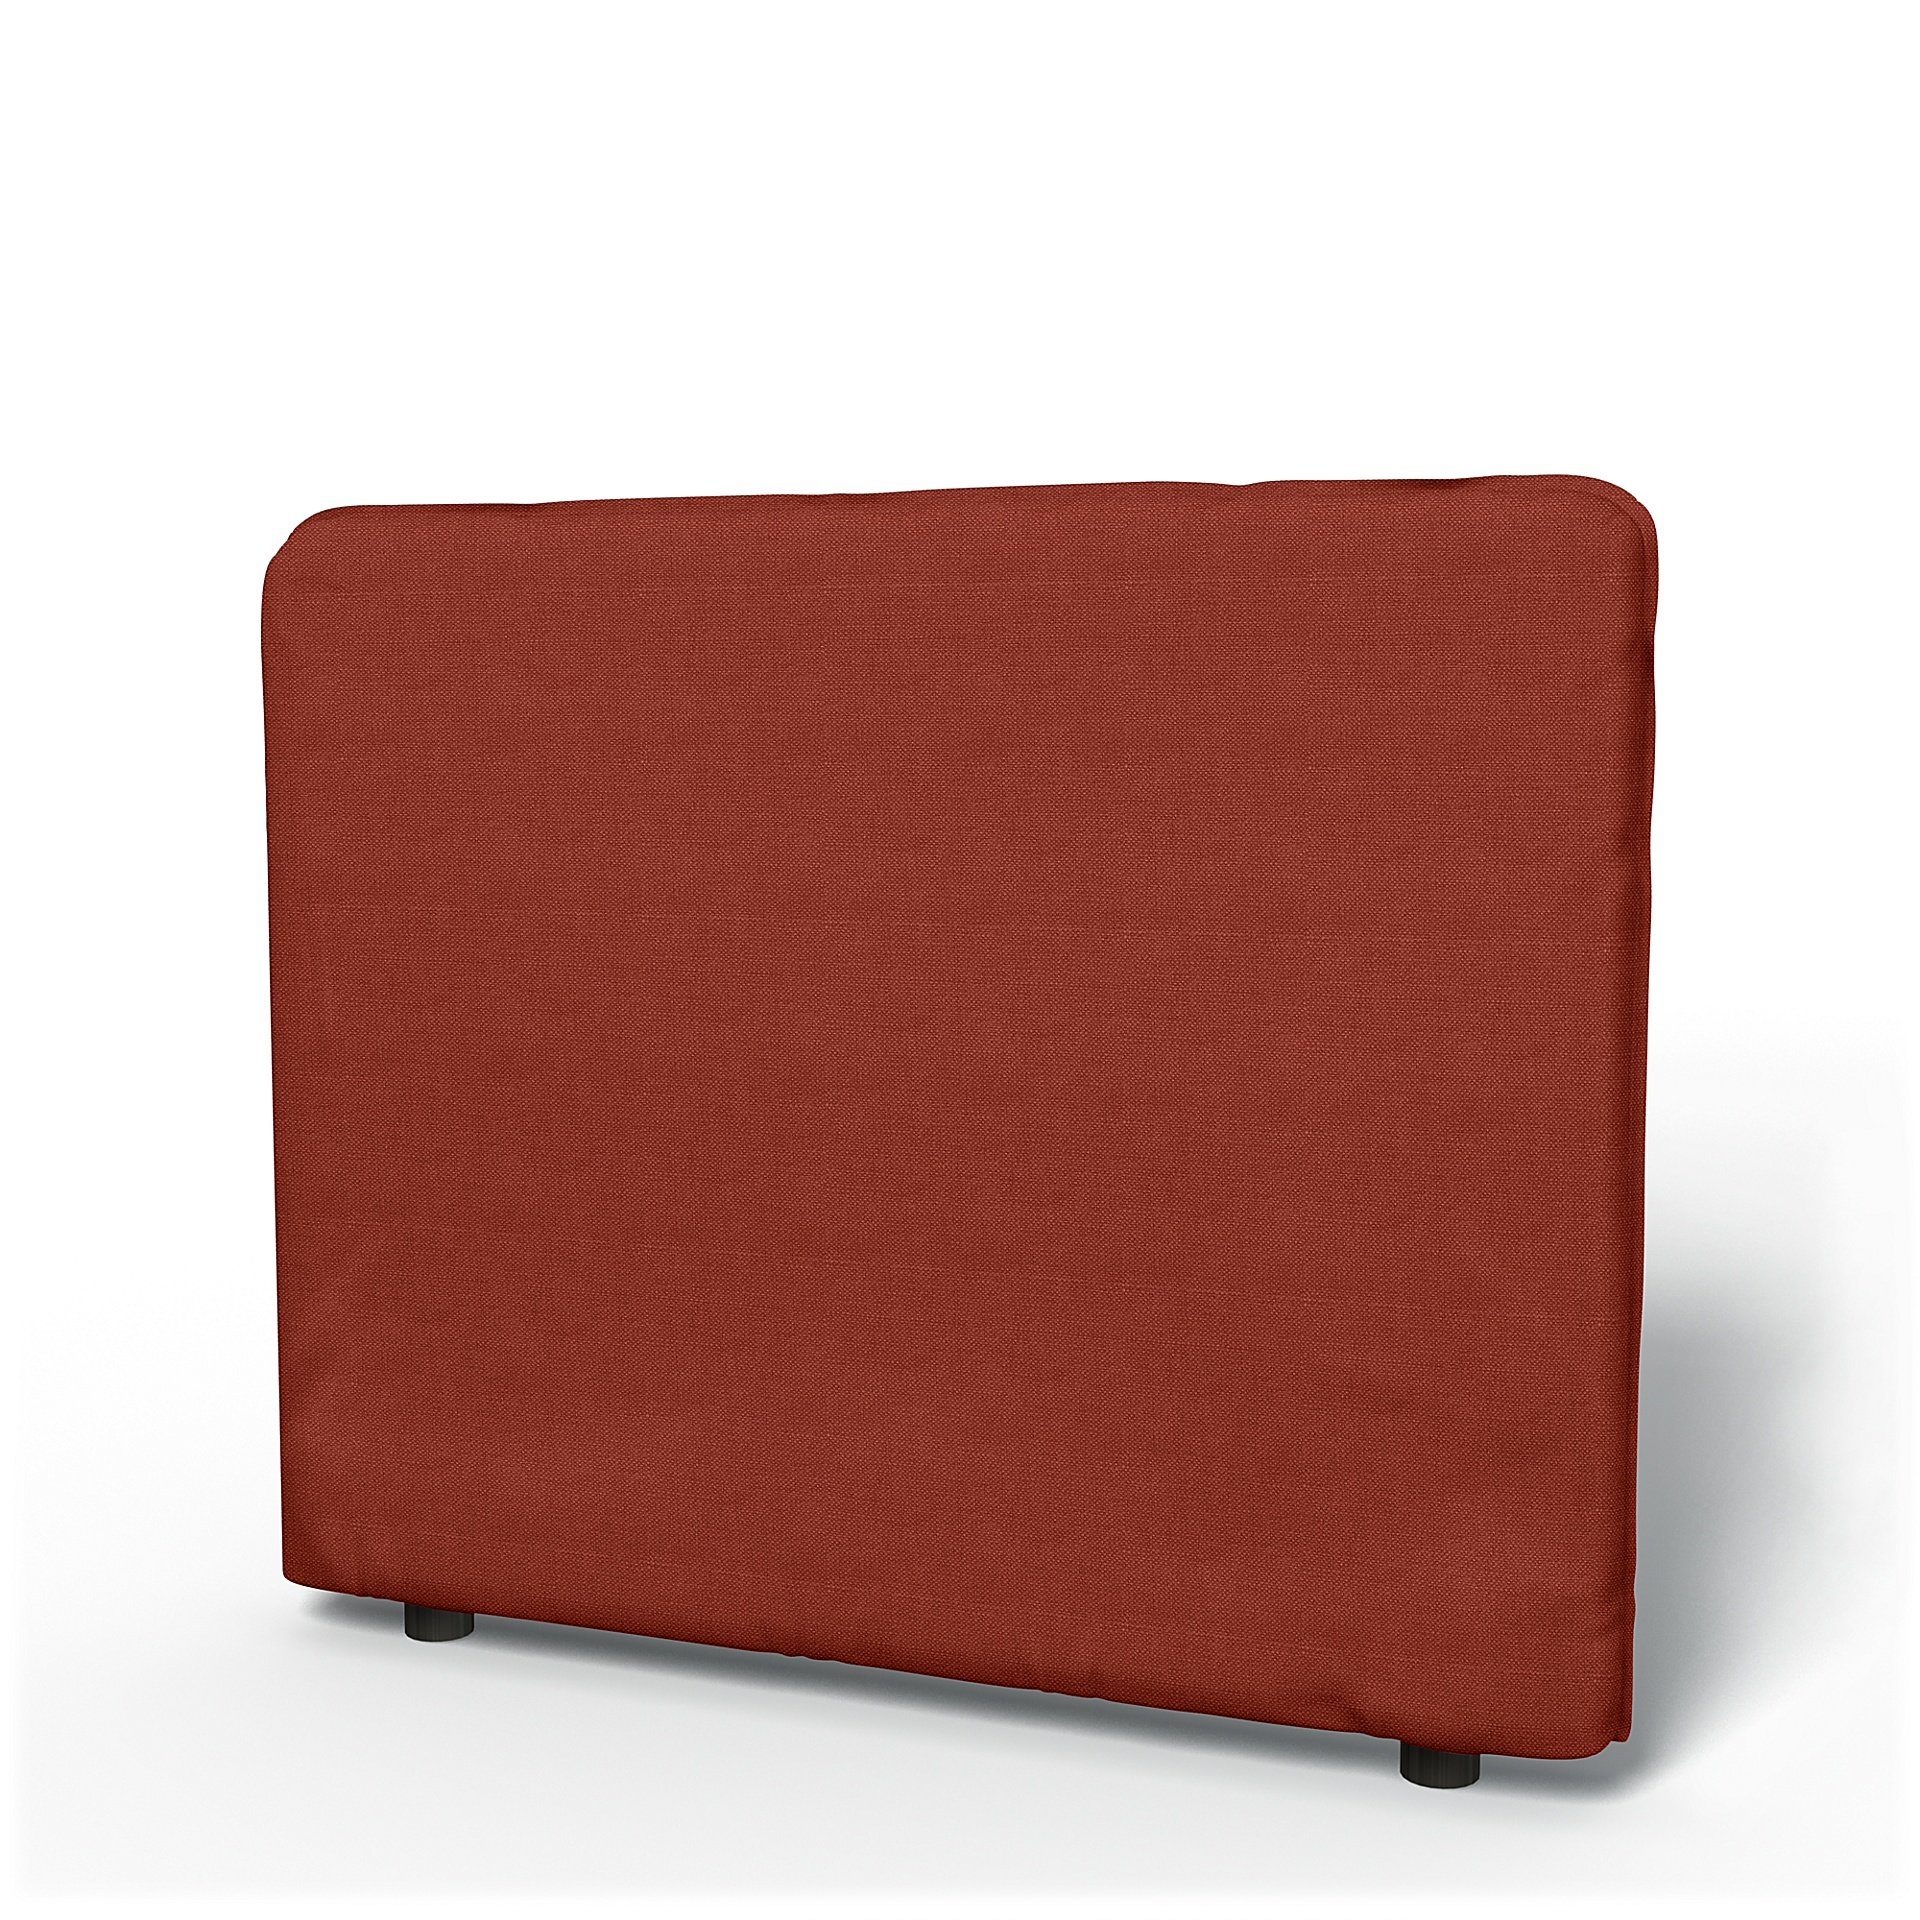 IKEA - Vallentuna Low Backrest Cover 100x80cm 39x32in, Cayenne, Linen - Bemz